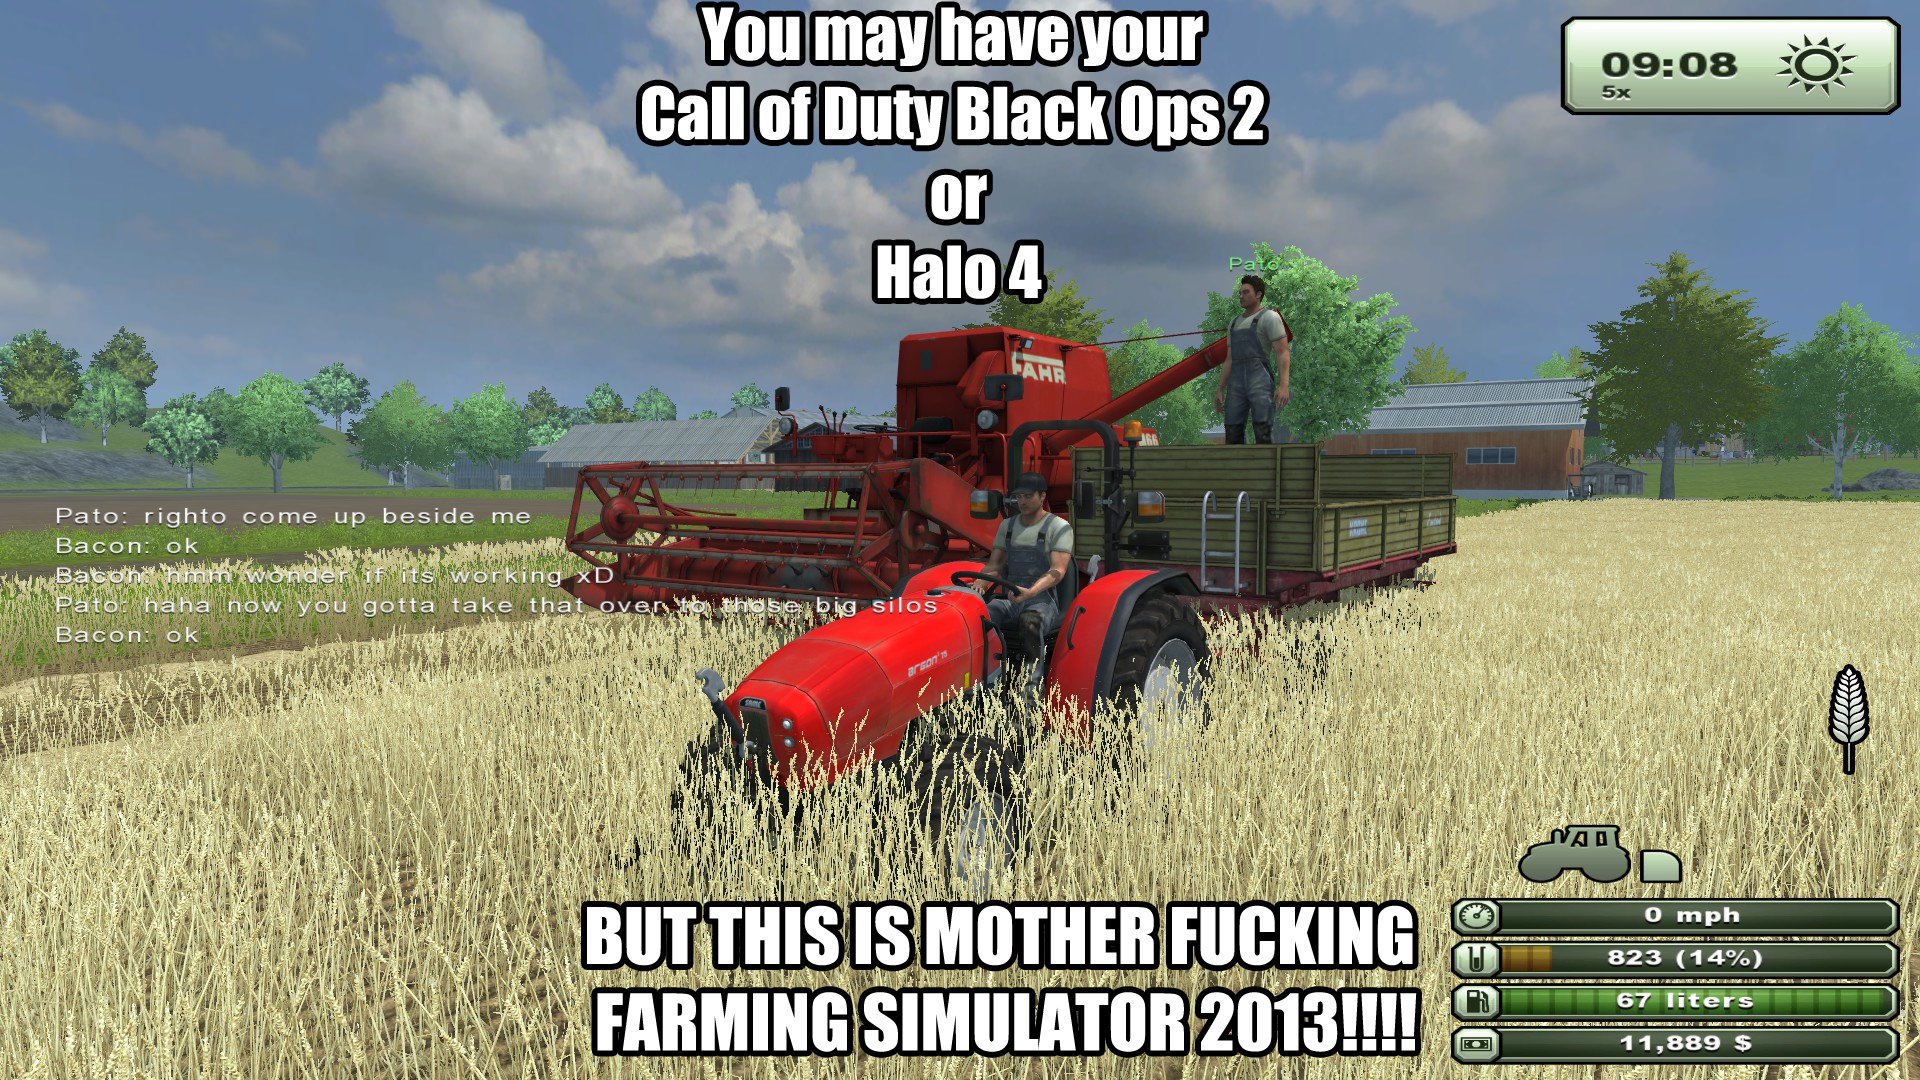 MOTHER FUCKING FARMING SIMULATOR